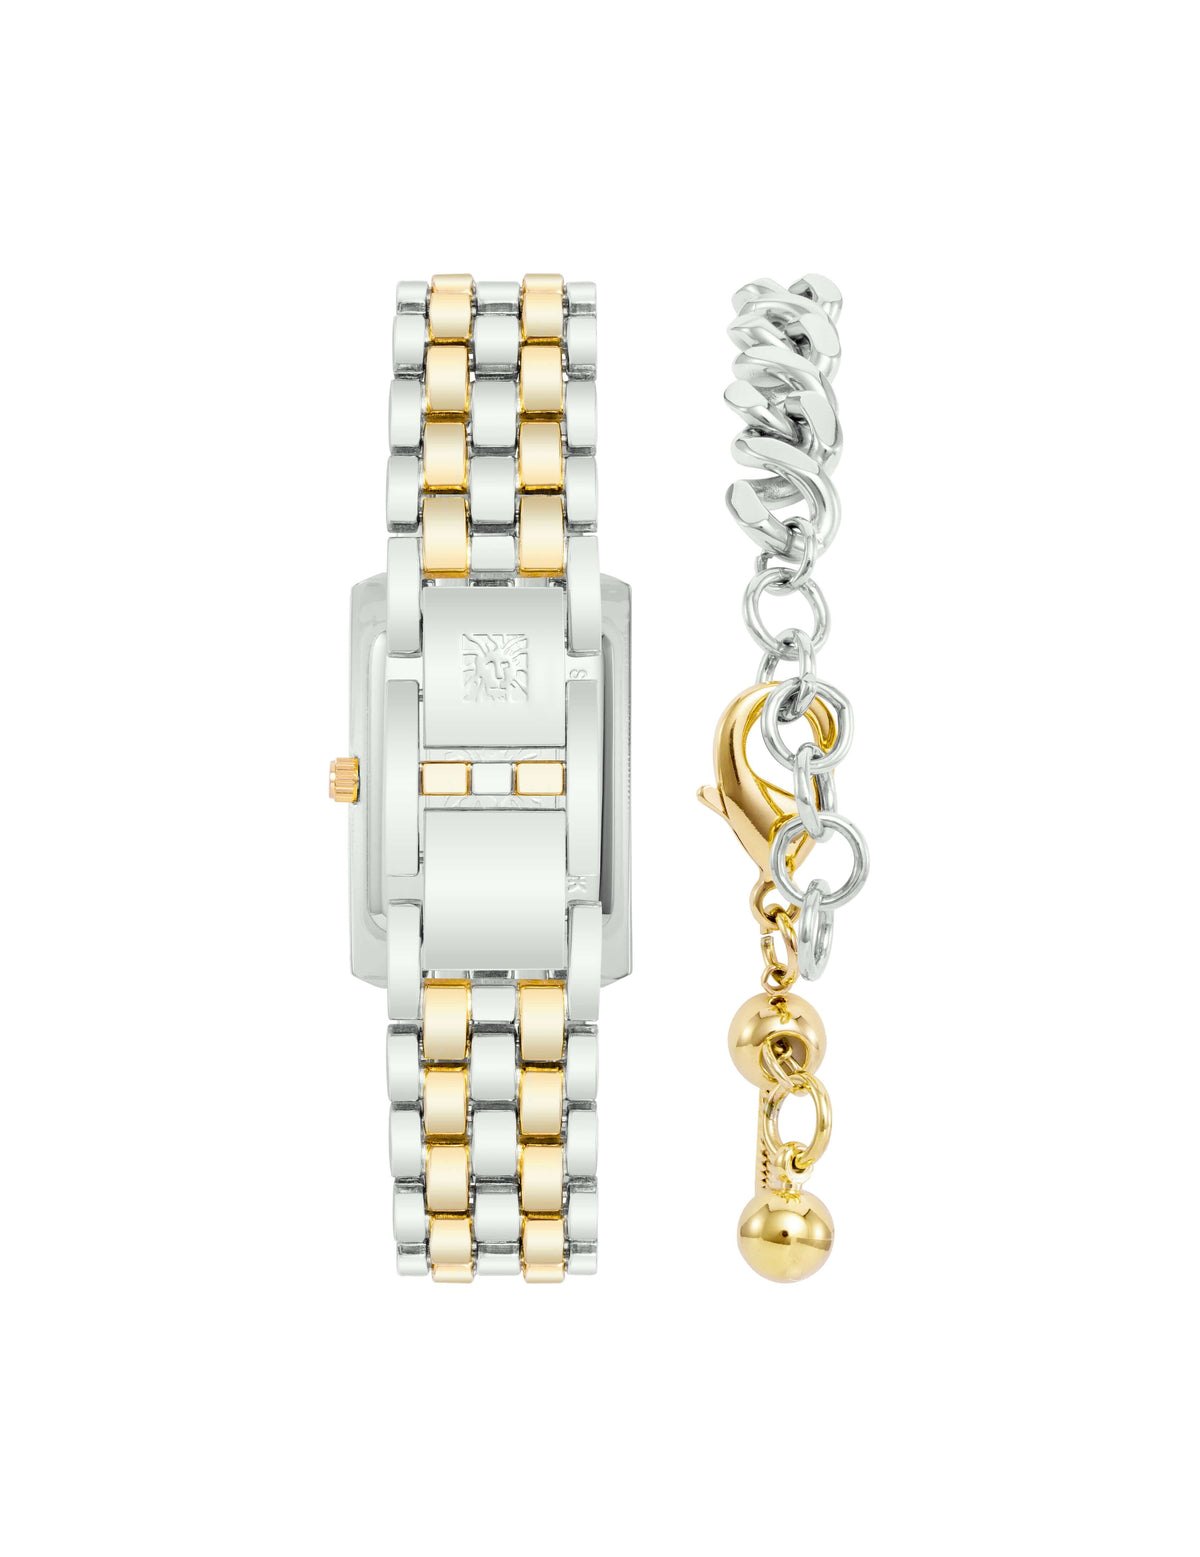 Anne Klein  Rectangular Crystal Accented Watch Set with Chain Bracelet